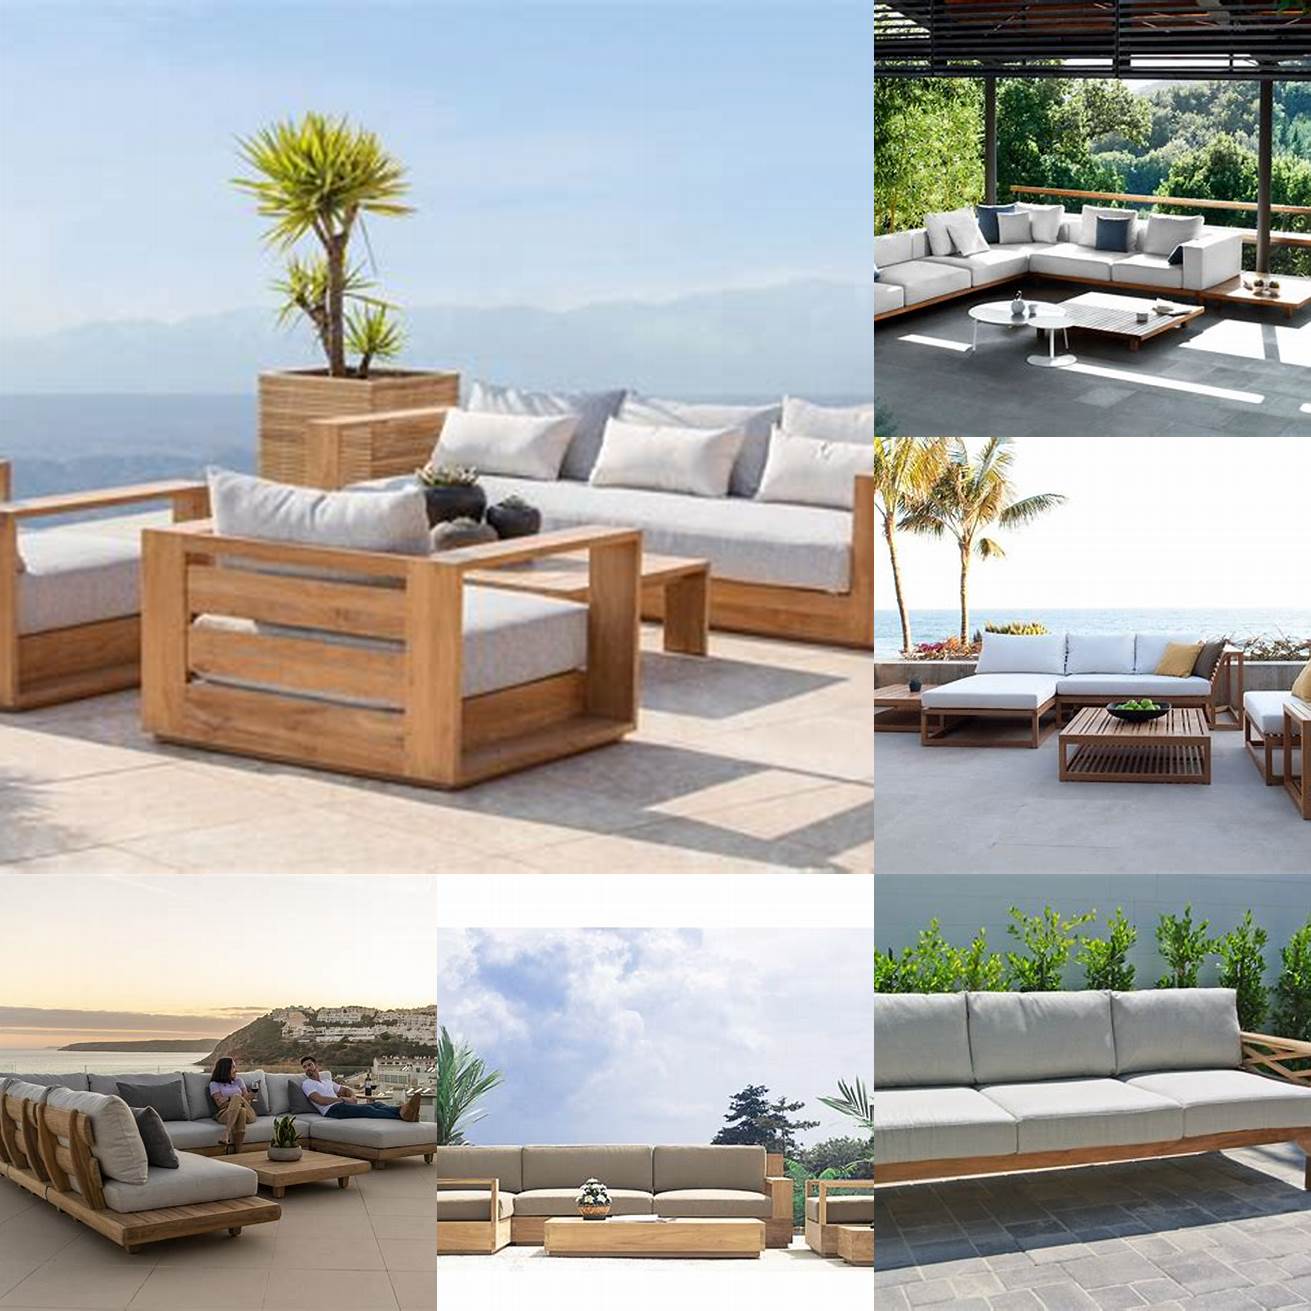 A picture of RHF Divano Teak furniture in a modern outdoor space